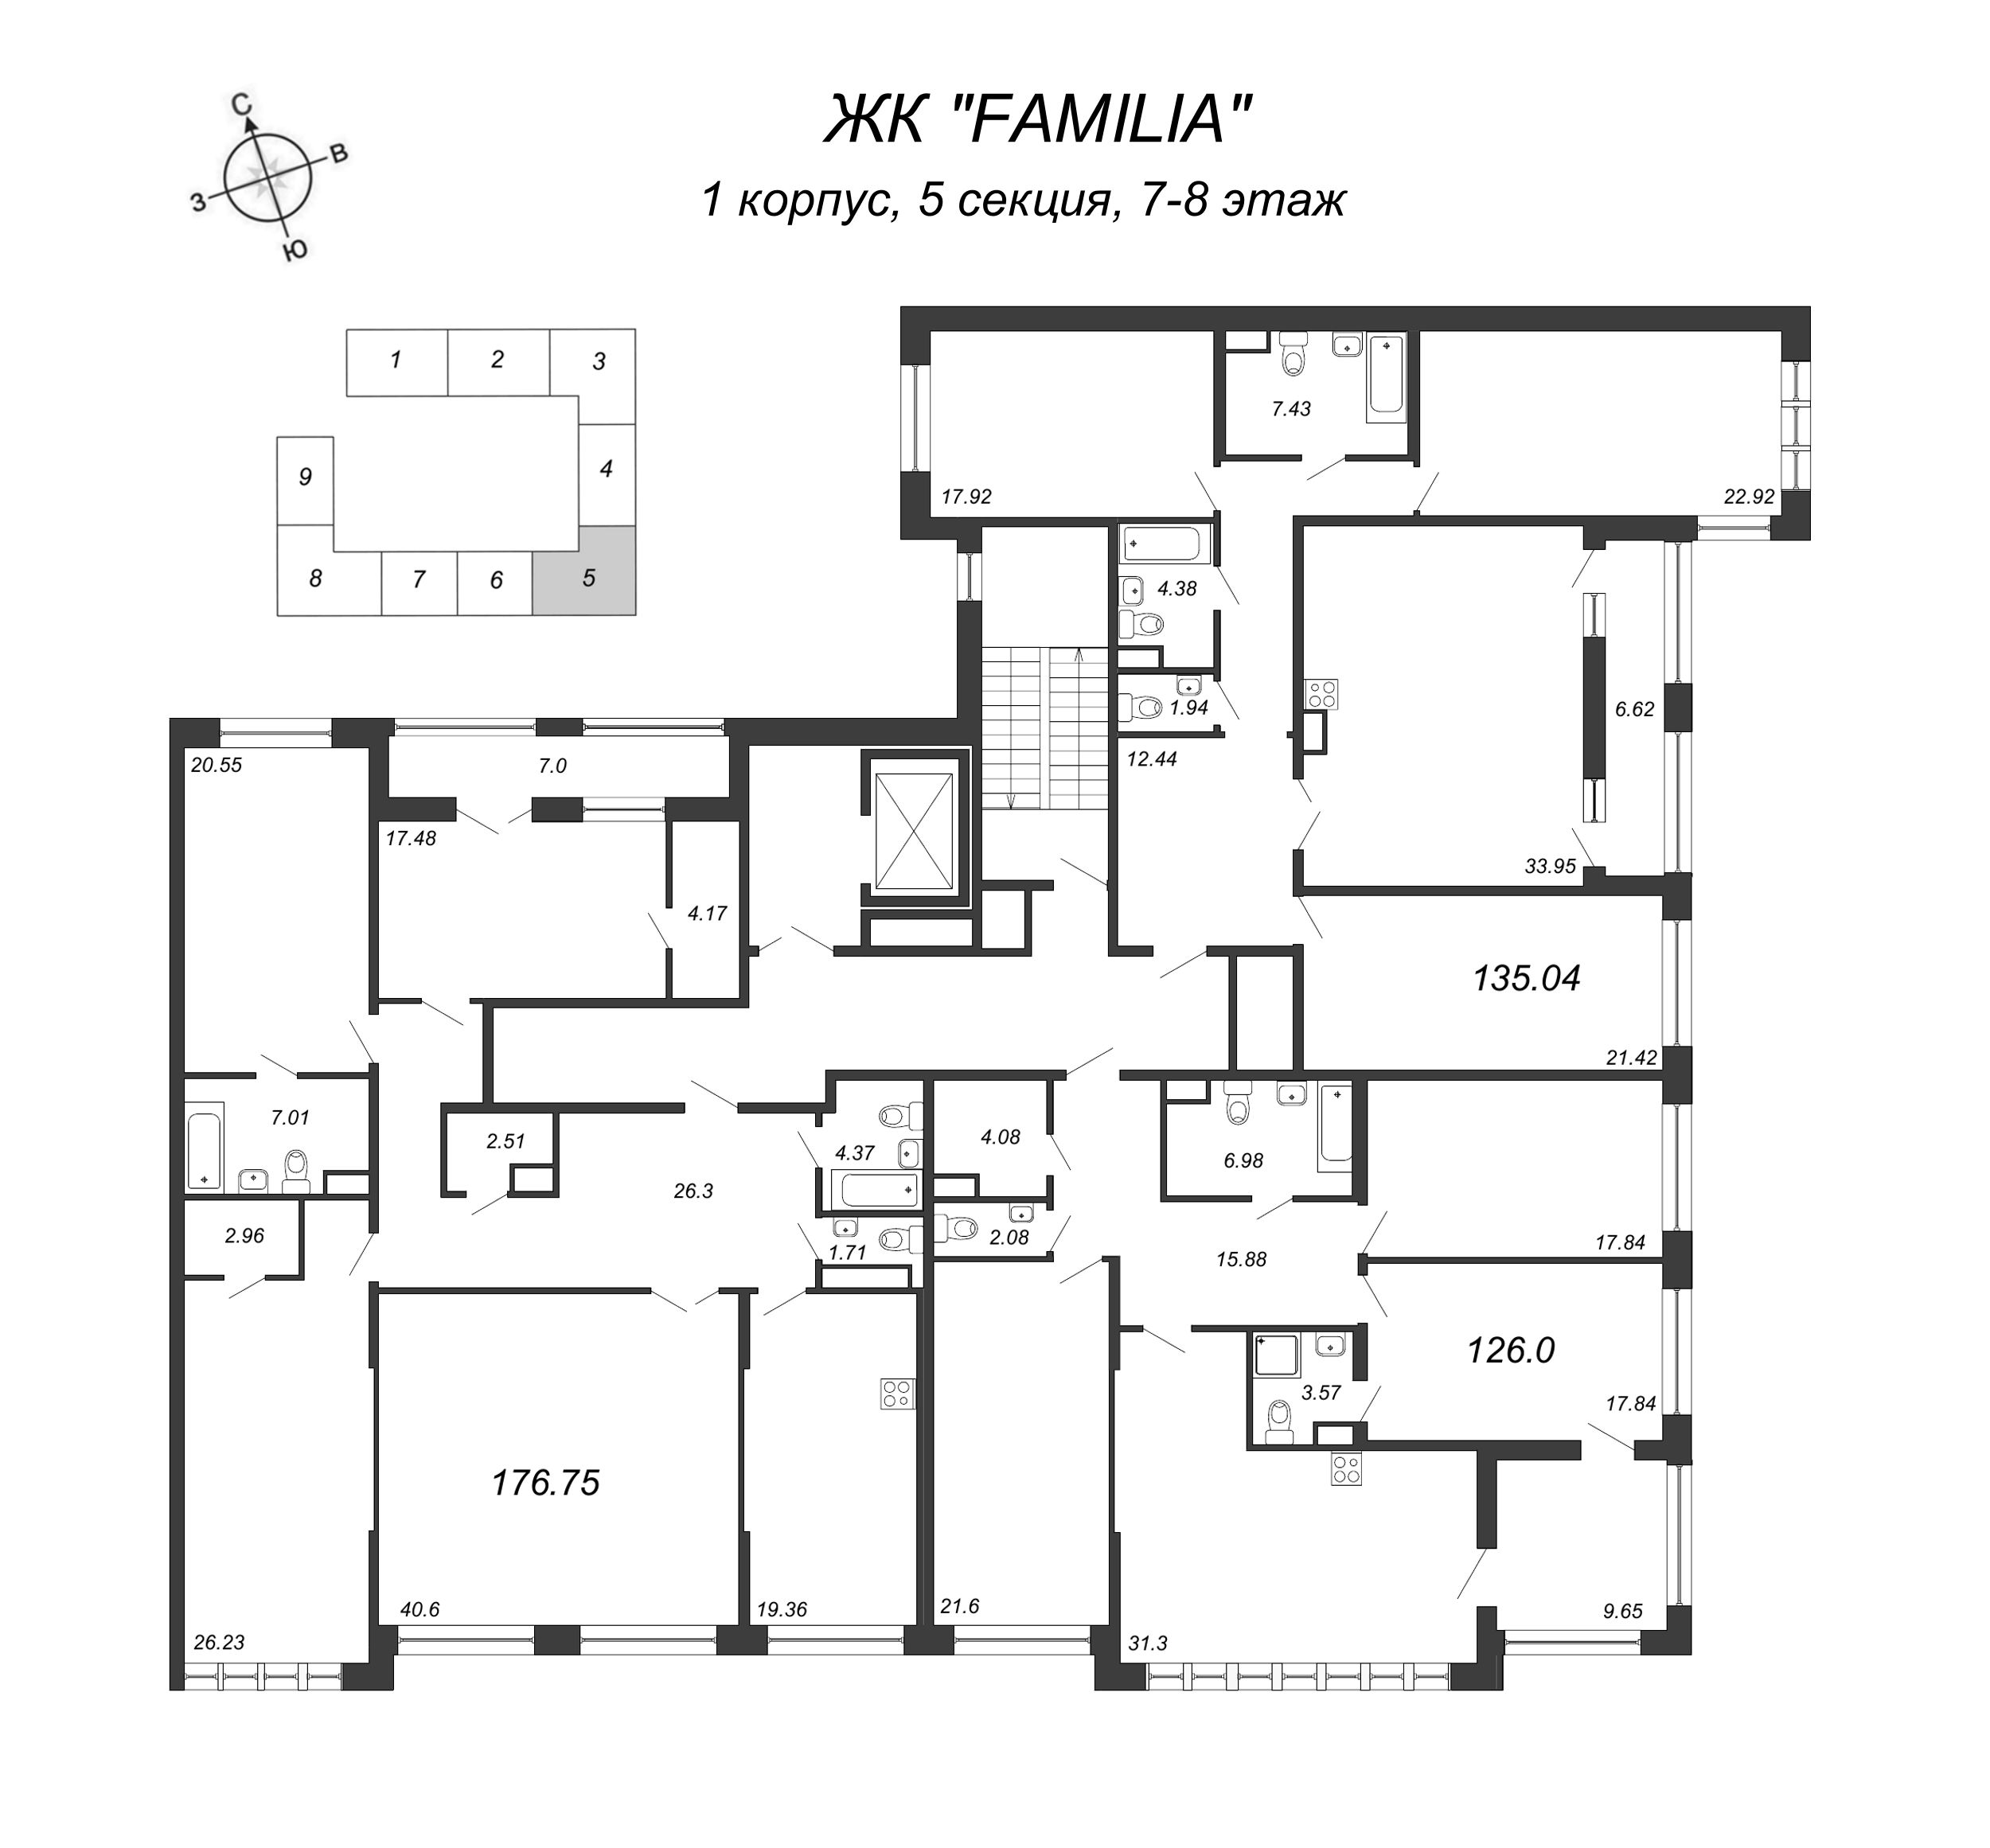 4-комнатная (Евро) квартира, 125.7 м² в ЖК "FAMILIA" - планировка этажа